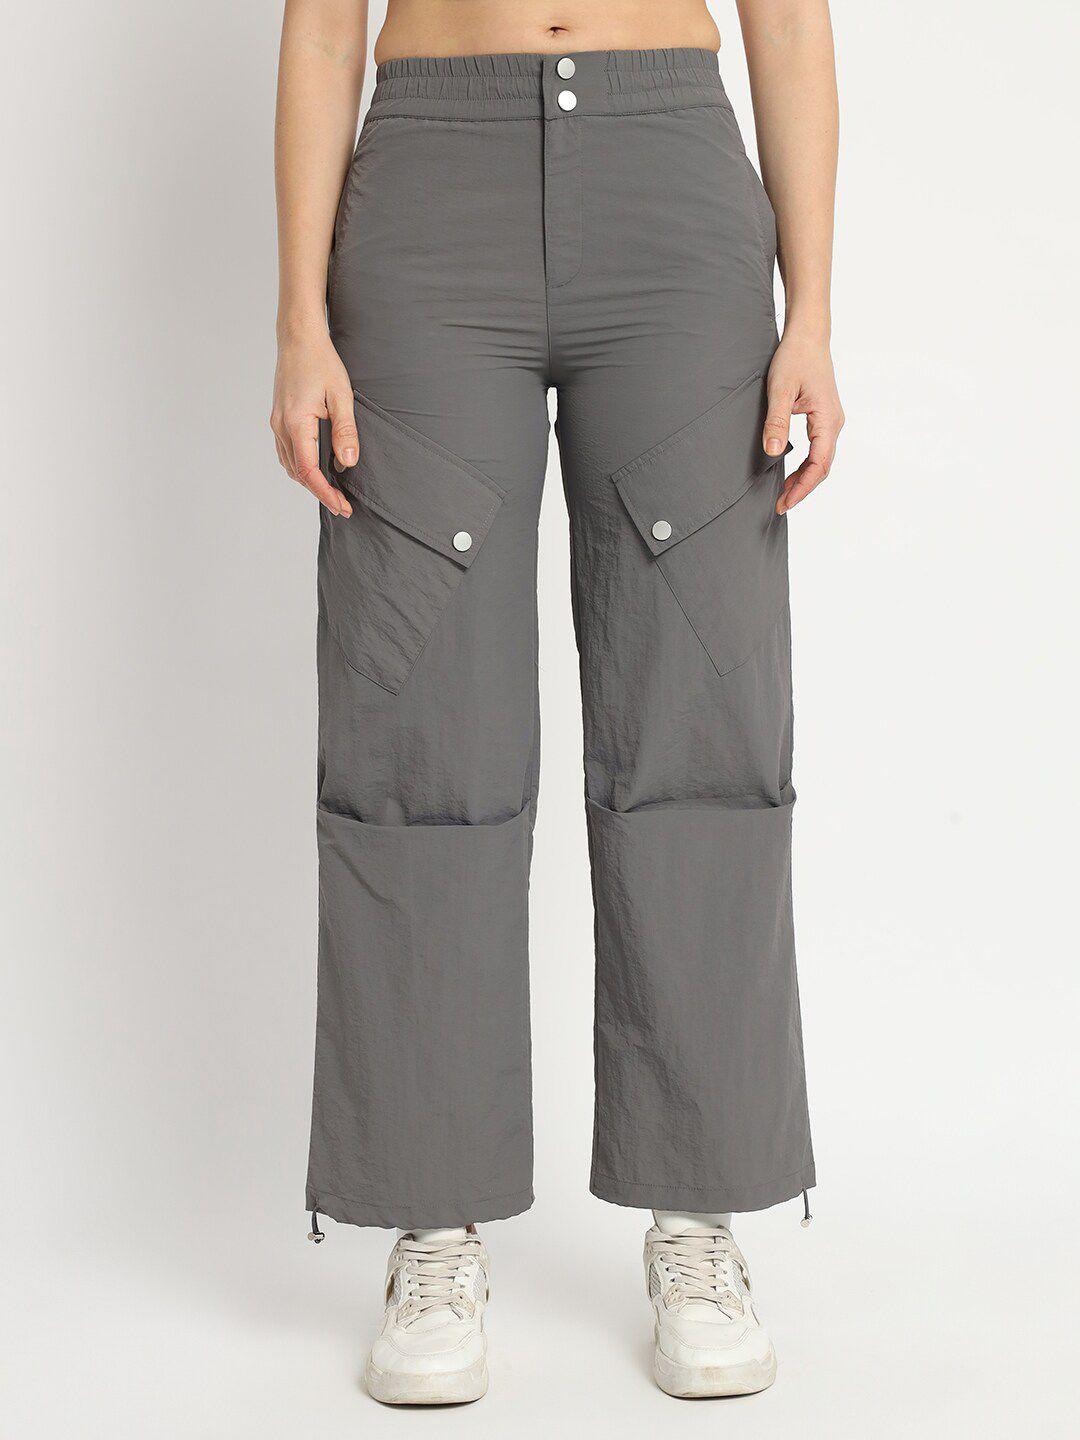 vividartsy women grey tapered fit joggers trousers